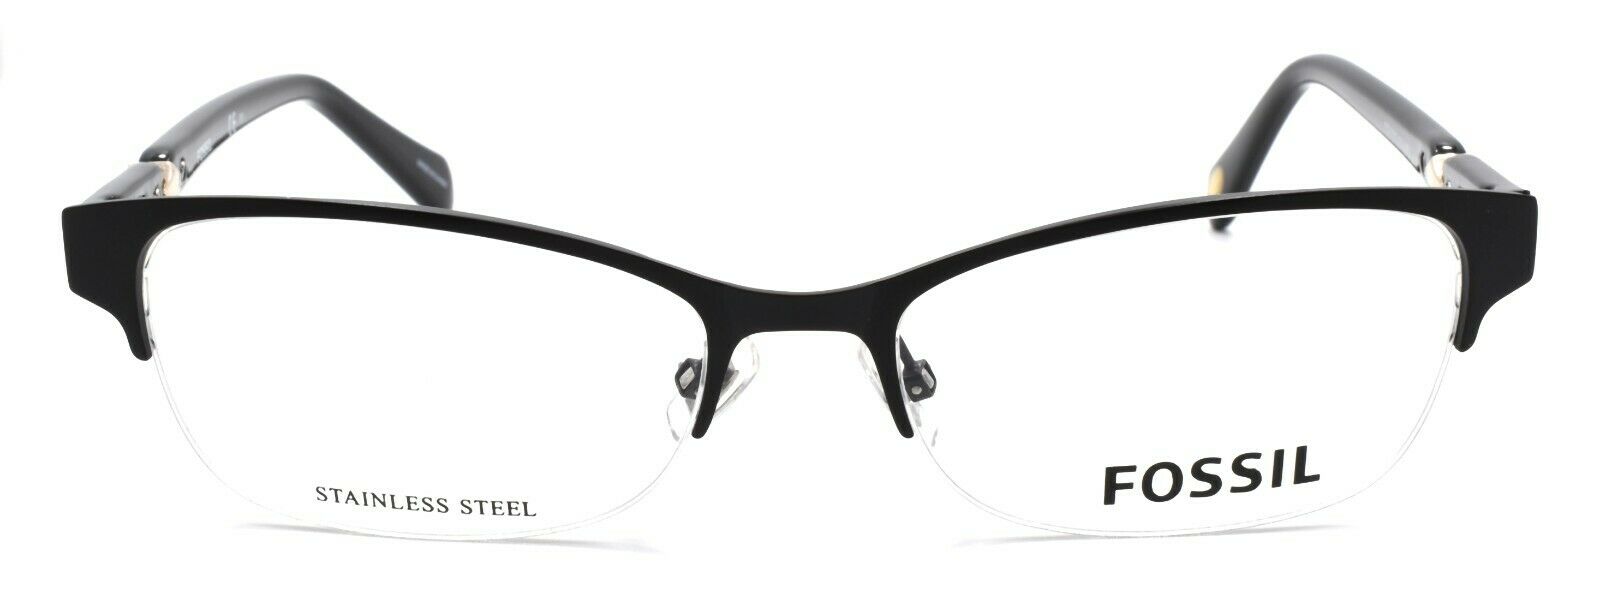 2-Fossil FOS 7000 10G Women's Eyeglasses Frames Half-rim 53-17-140 Matte Black-762753772794-IKSpecs